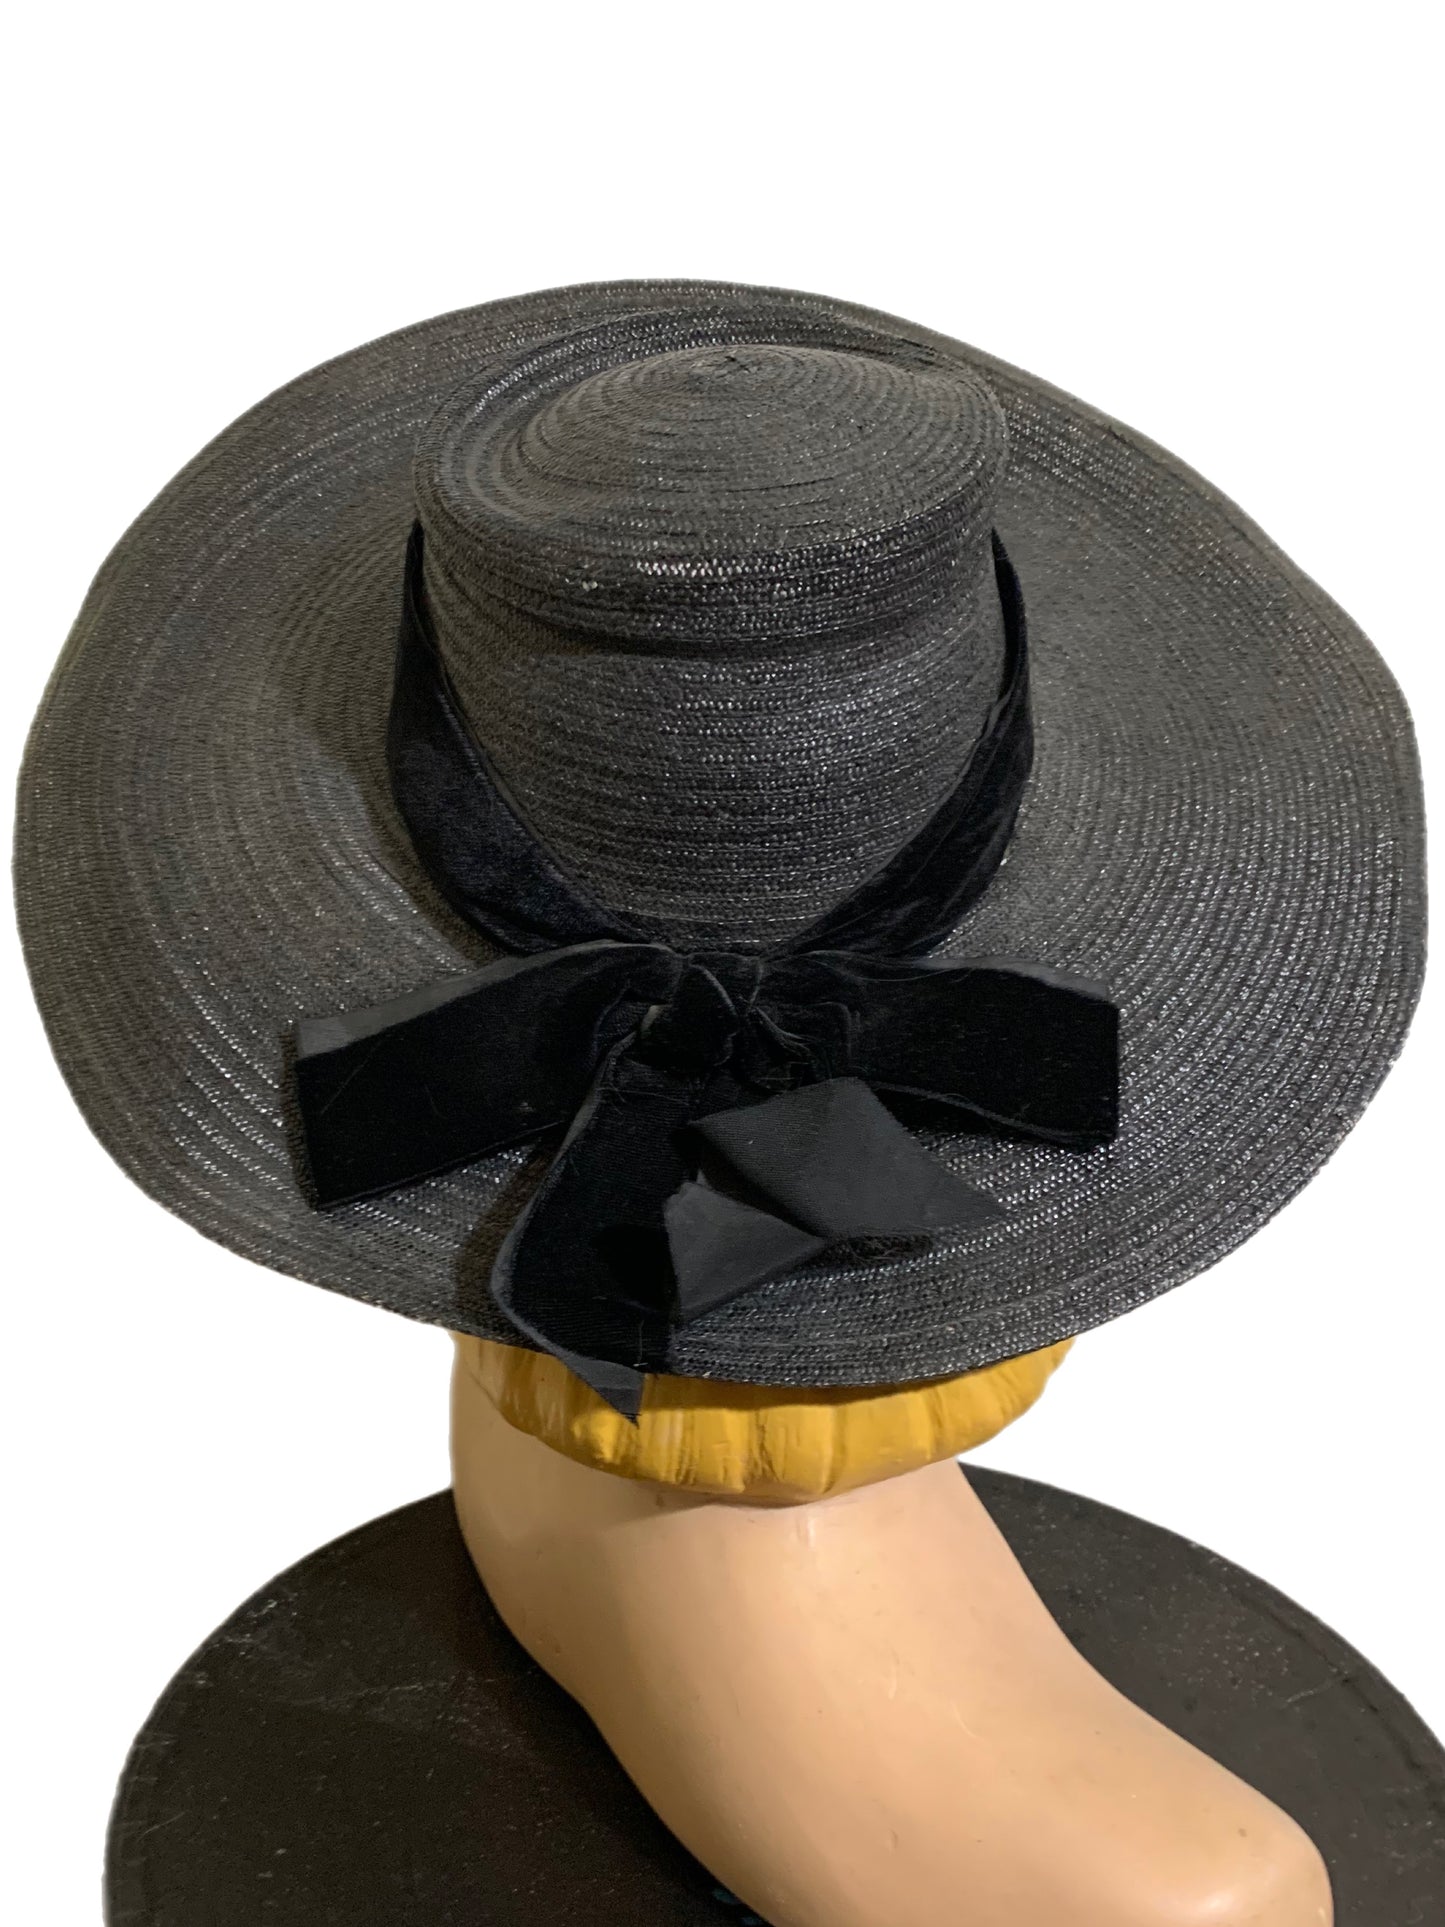 Panther Black Wide Brim Portrait Hat with Velvet Bow circa 1940s